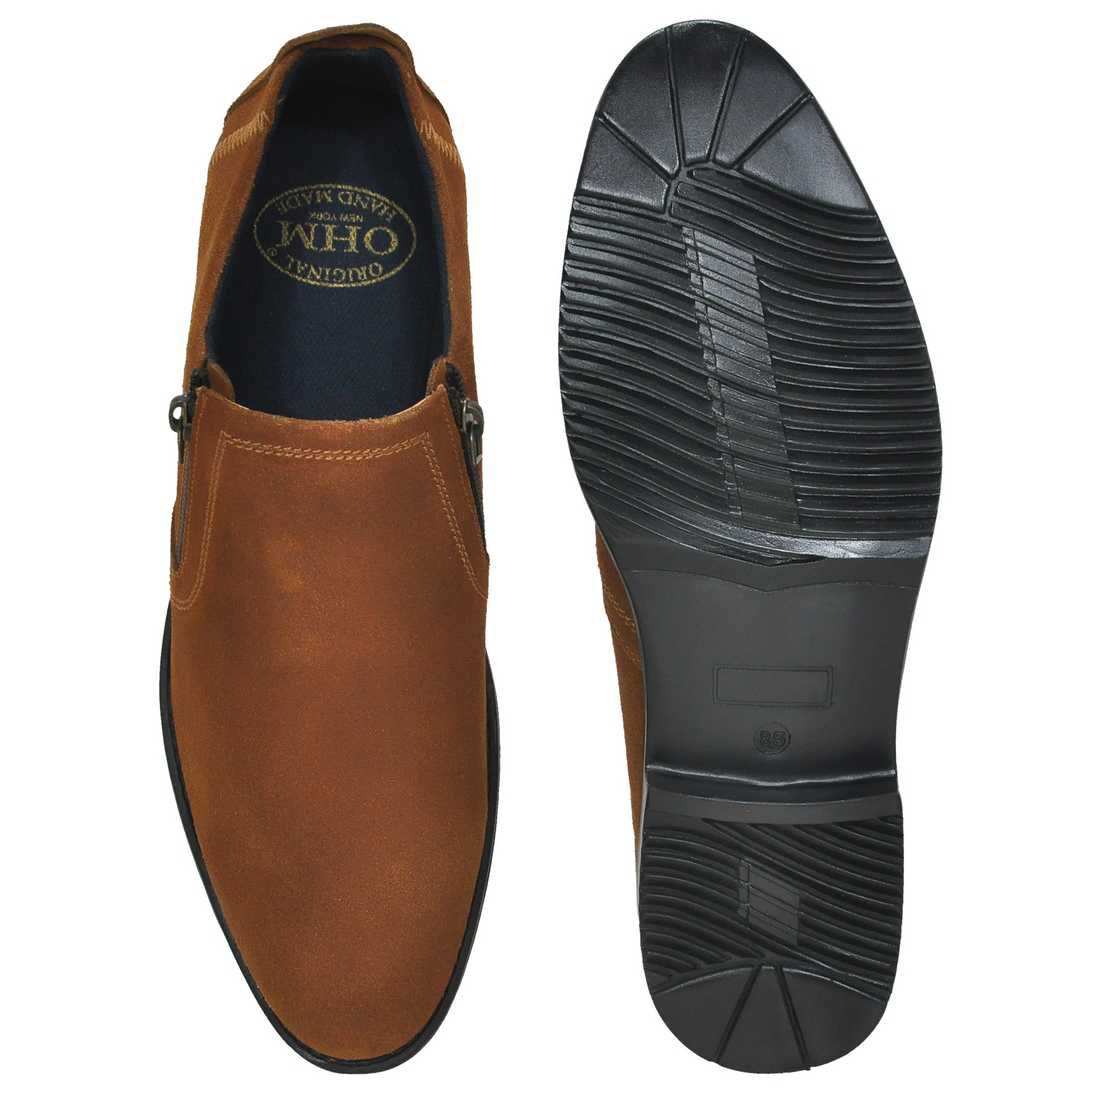 Plain Toe Stylish Suede Slip-On Shoes for Evening Style